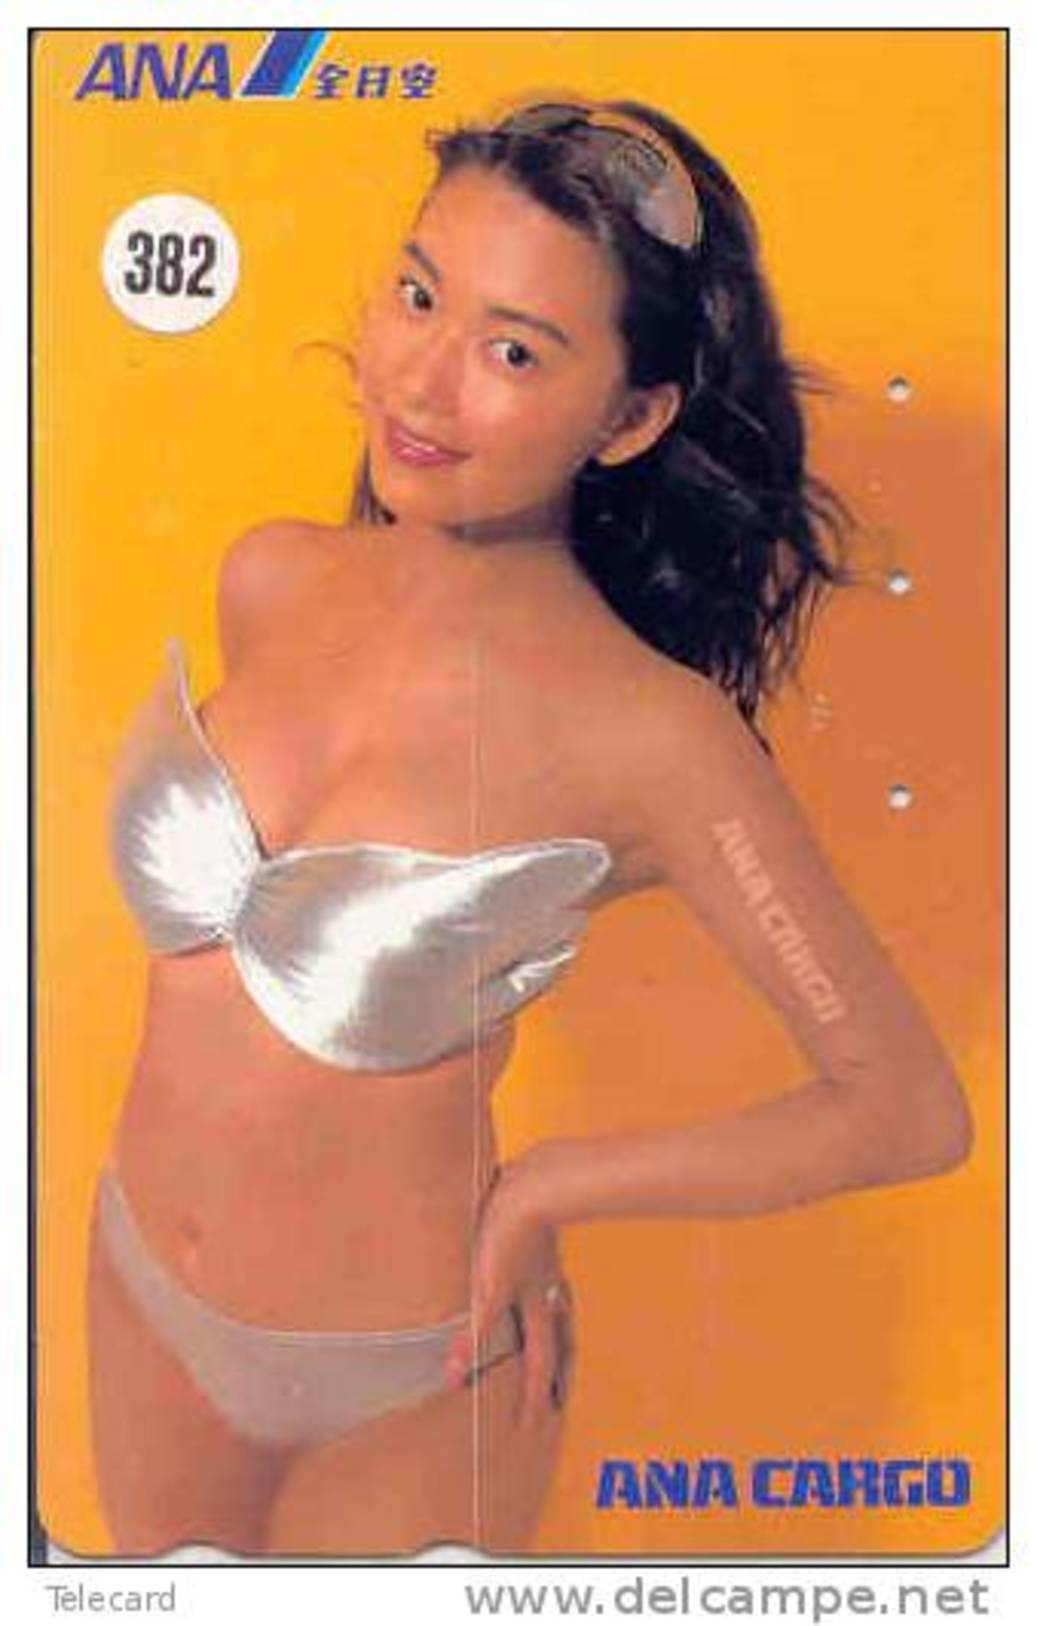 Télécarte Japan EROTIQUE (382) Sexy Lingerie Femme  EROTIC Japan Phonecard - EROTIK - EROTIEK  BIKINI BATHCLOTHES - Mode